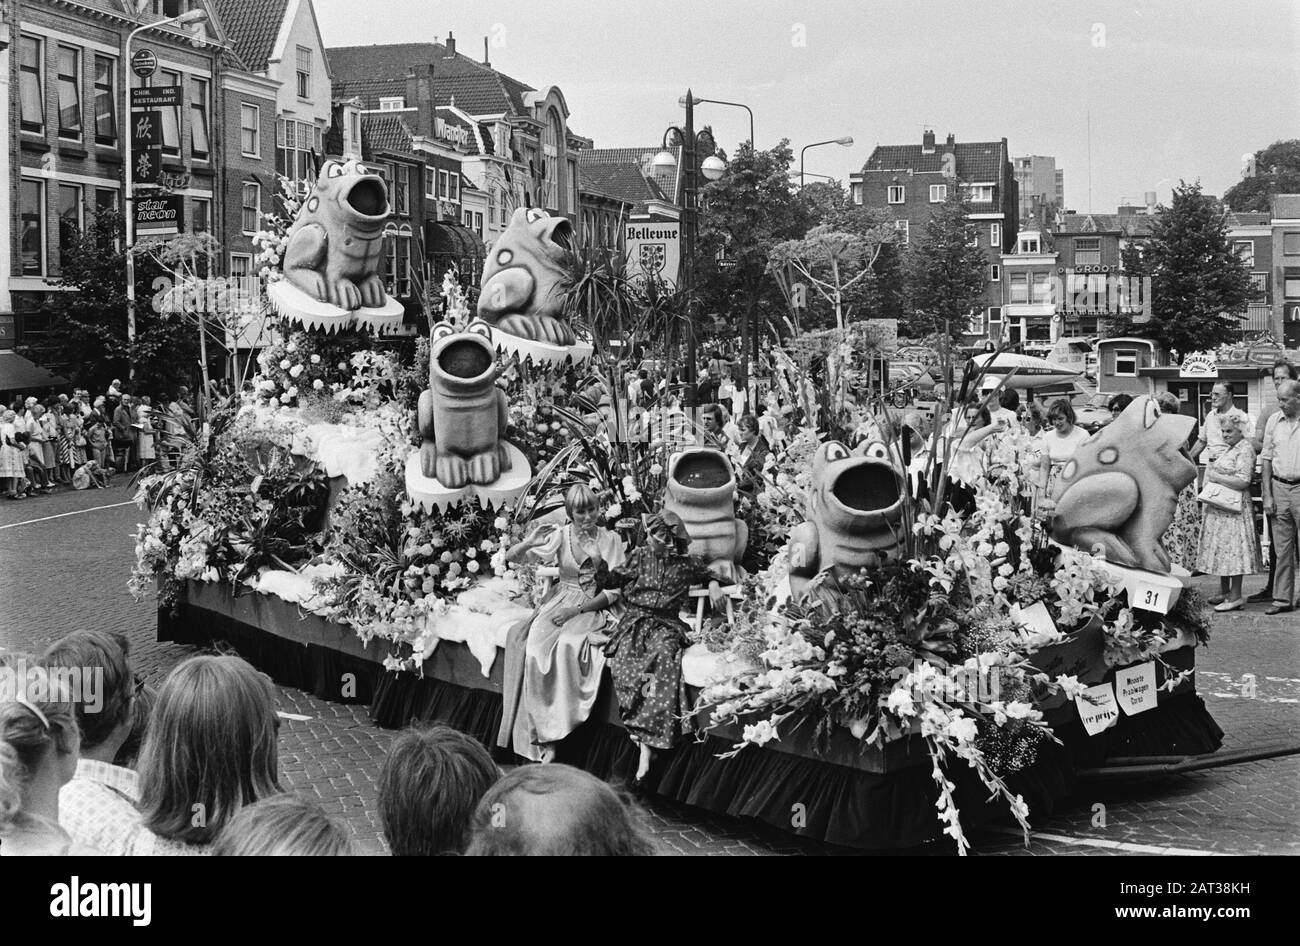 La fleur corso de Rijnsburg Date : 2 août 1980 lieu : Rijnsburg, South-Holland mots clés : flotteurs Banque D'Images